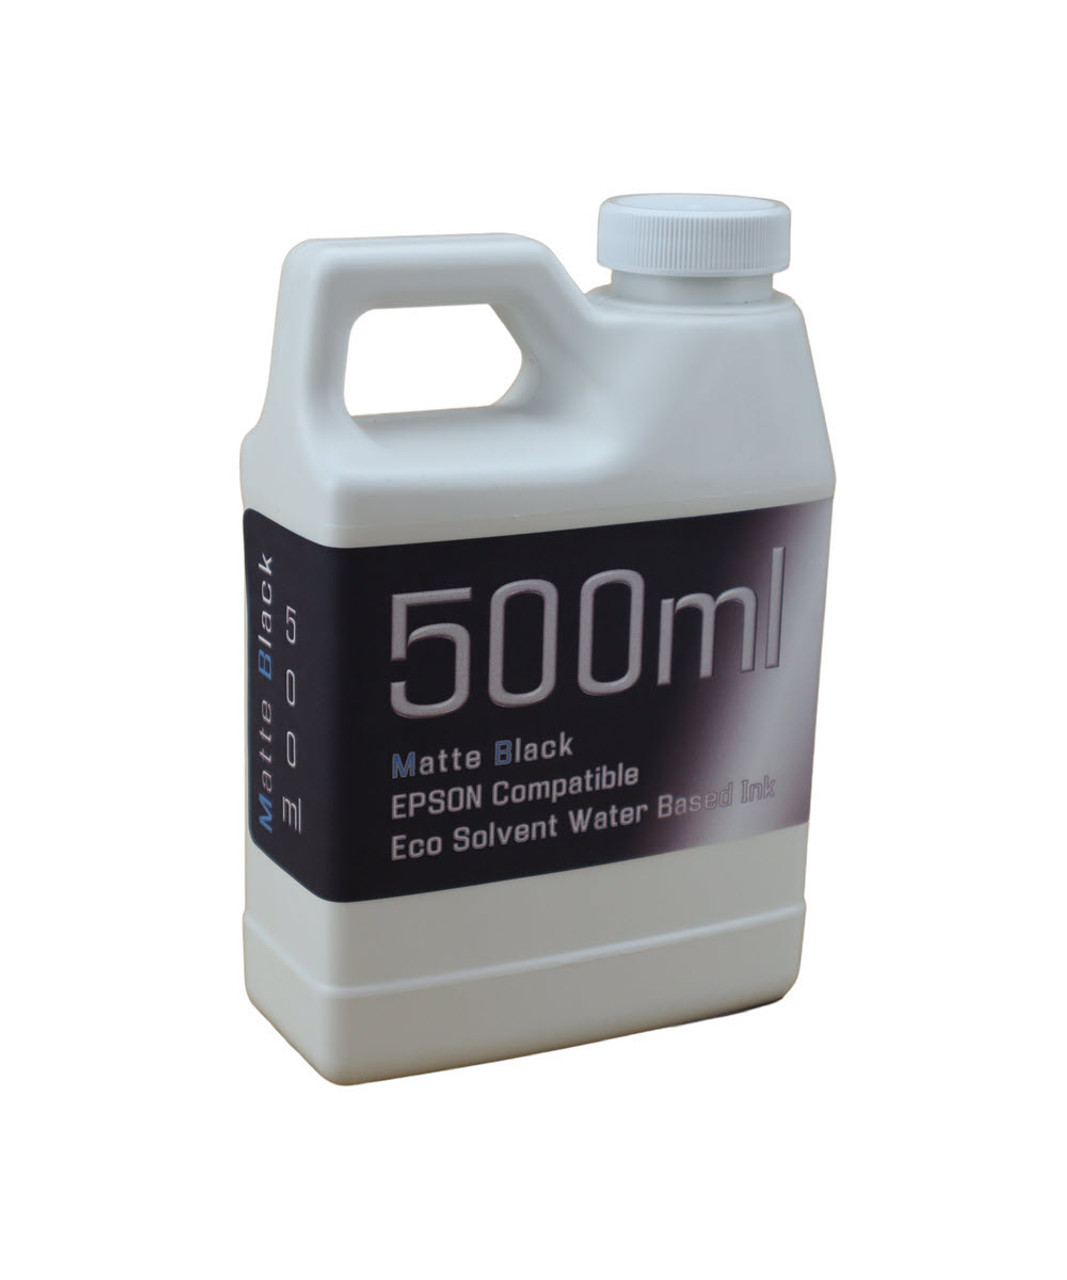 Matte Black Water Based Eco Solvent Ink 500ml Bottle for Epson SureColor T3000 T5000 T7000 Printers